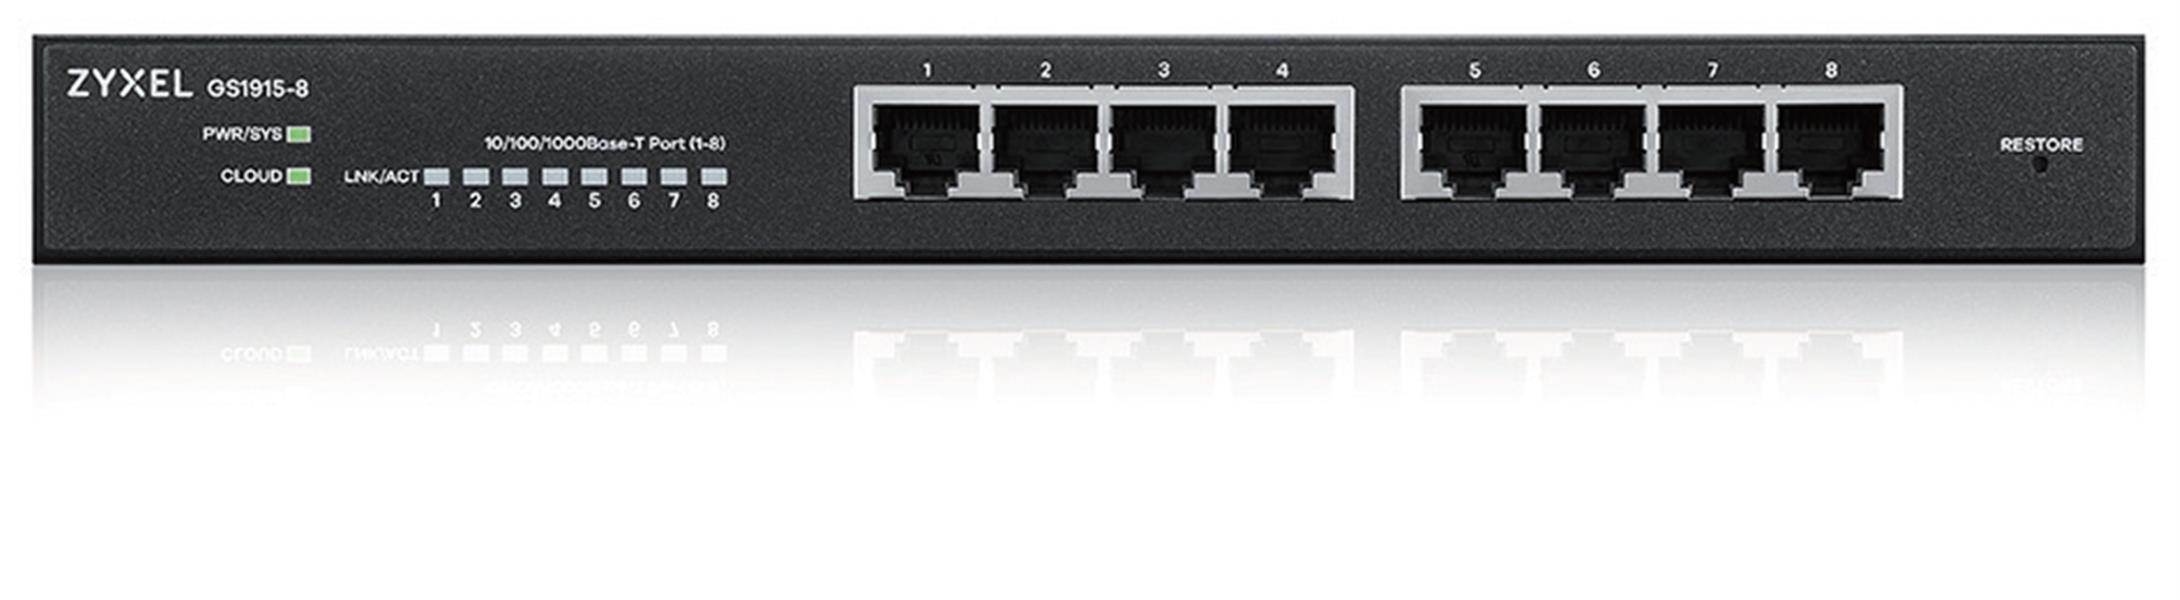 Zyxel GS1915-8 Managed L2 Gigabit Ethernet (10/100/1000) Zwart